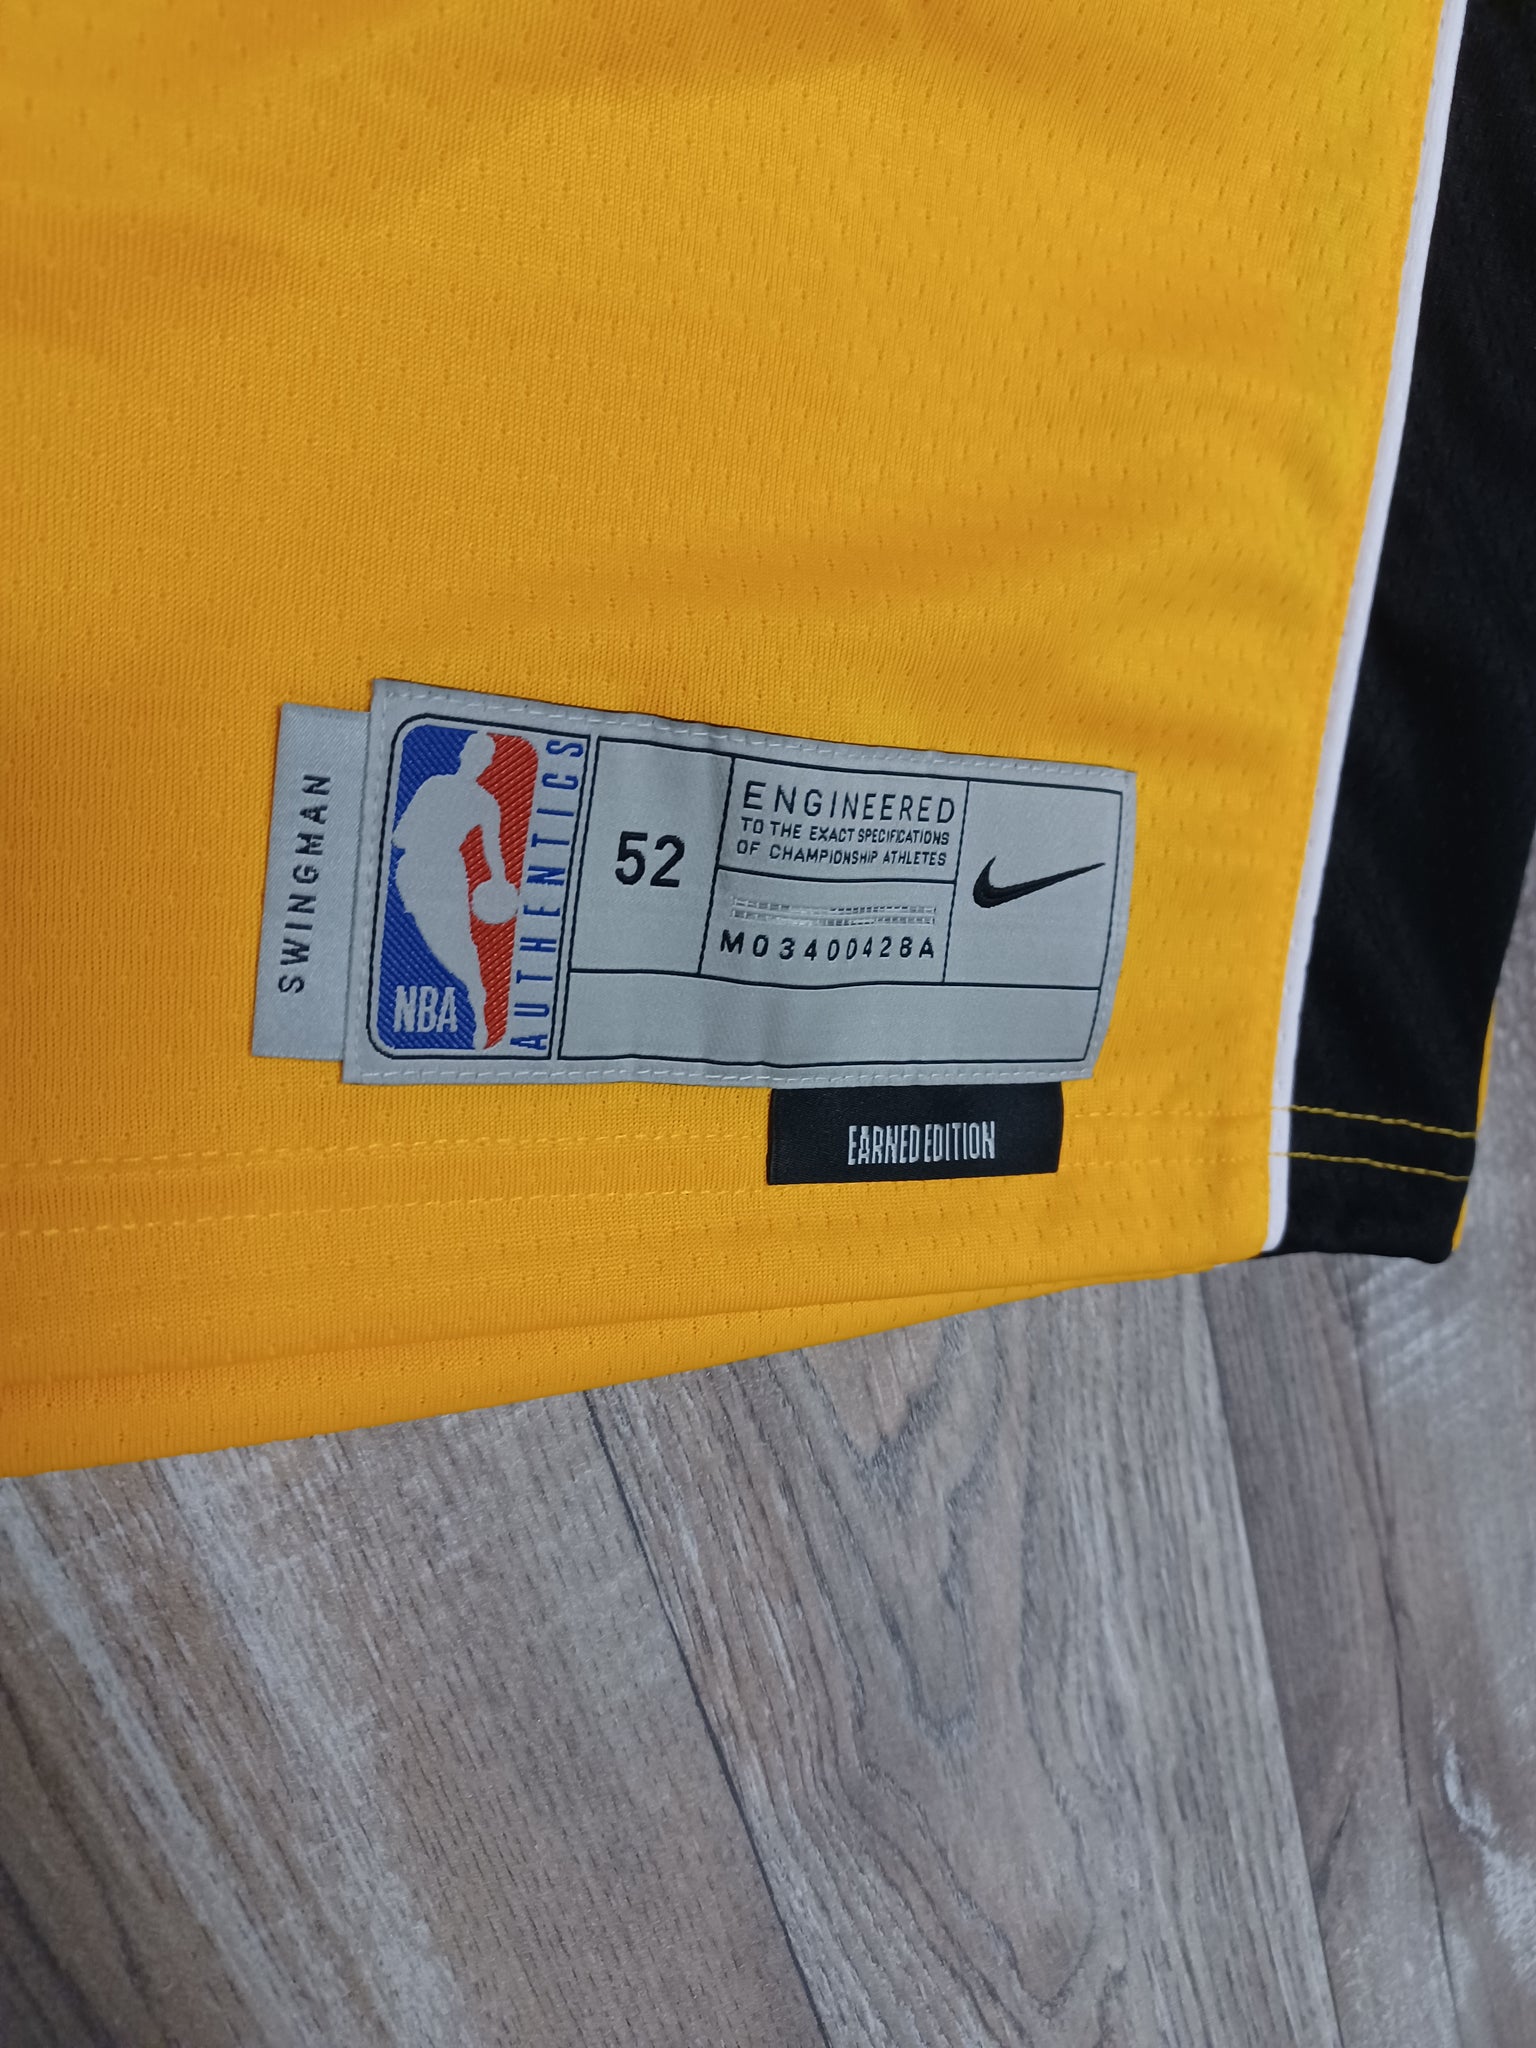 Miami Heat Nike NBA Earned Edition Swingman Jersey - Yellow - Size